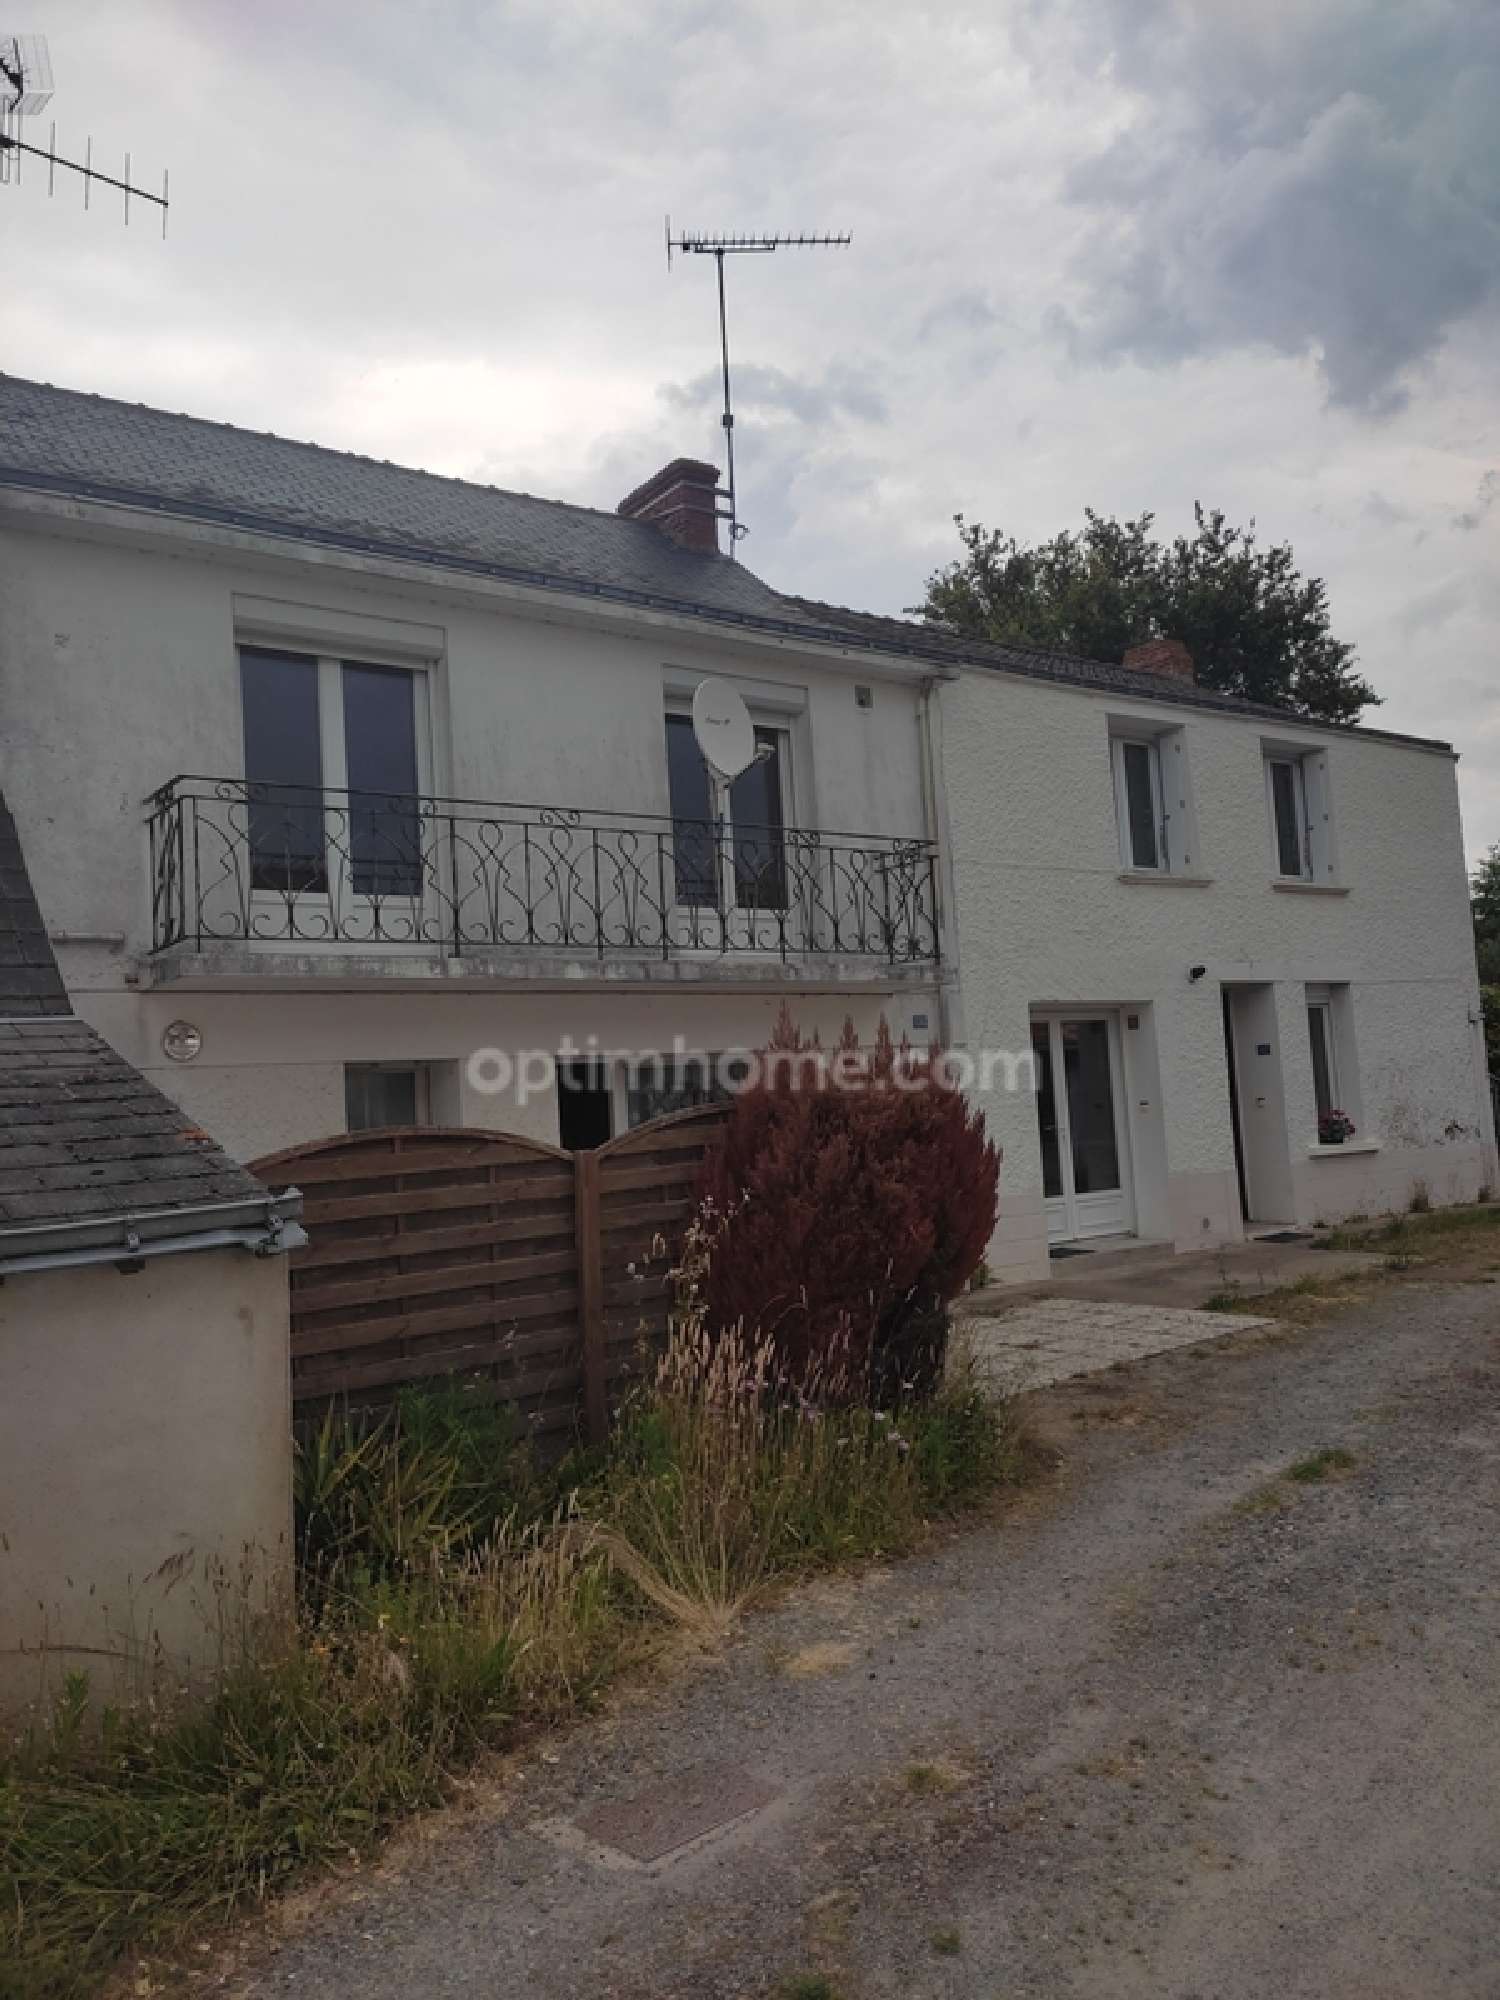  te koop huis Saint-Joachim Loire-Atlantique 1